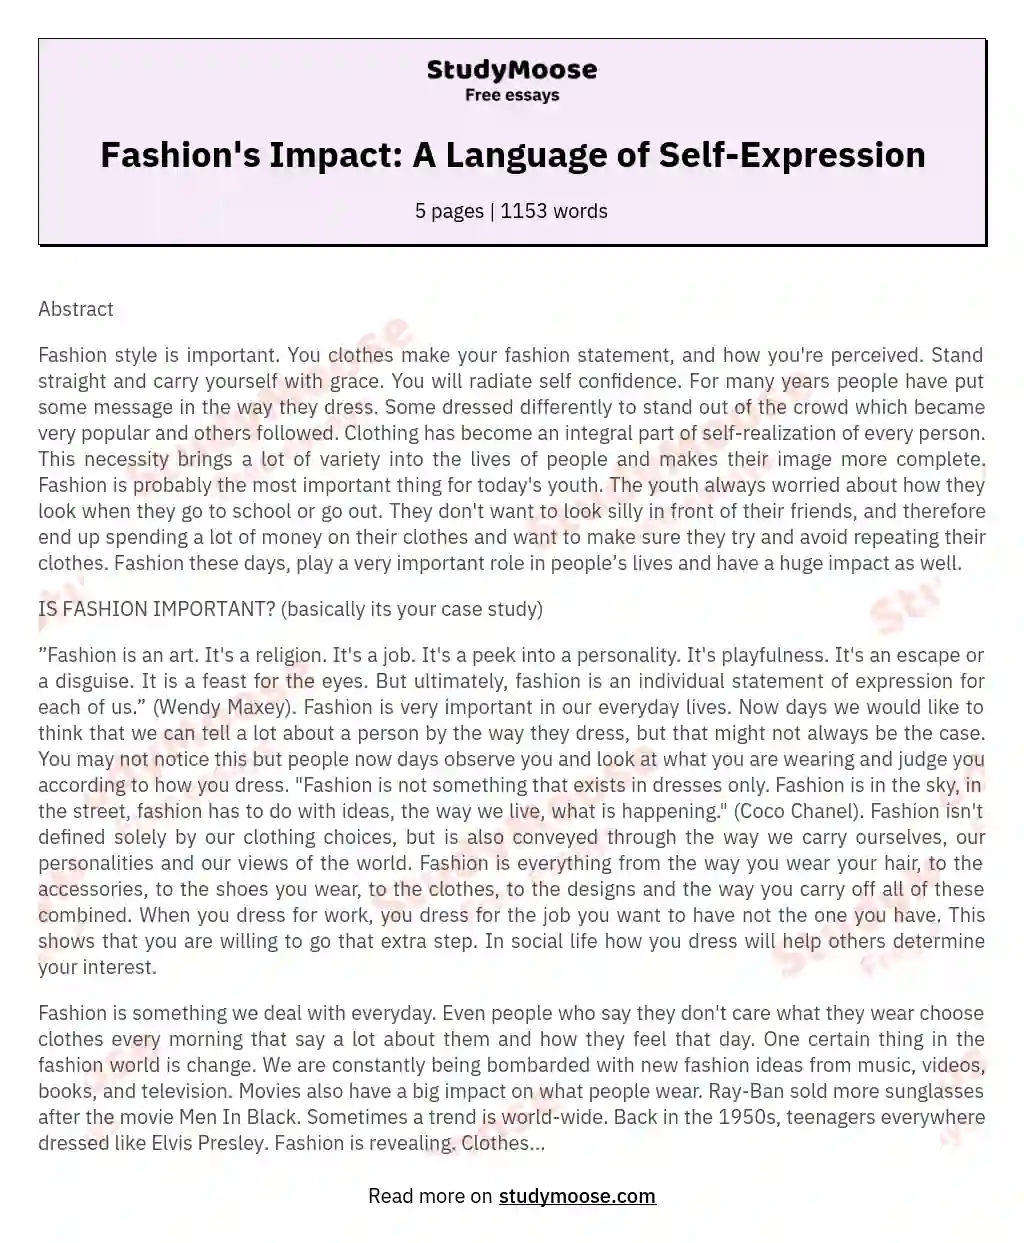 Fashion's Impact: A Language of Self-Expression essay